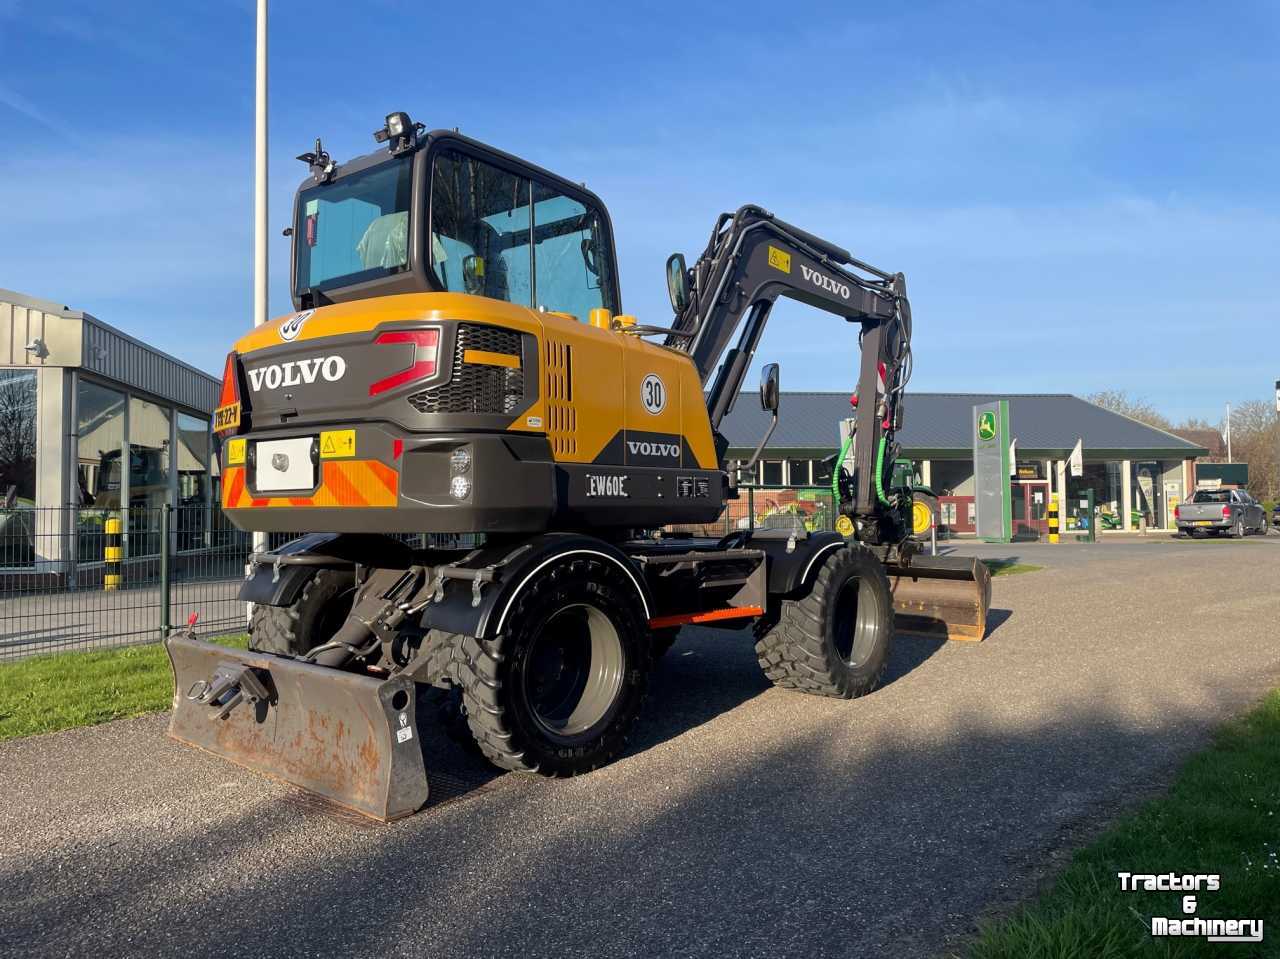 Excavator mobile Volvo Volvo EW60E mobile kraan graafmachine excavator